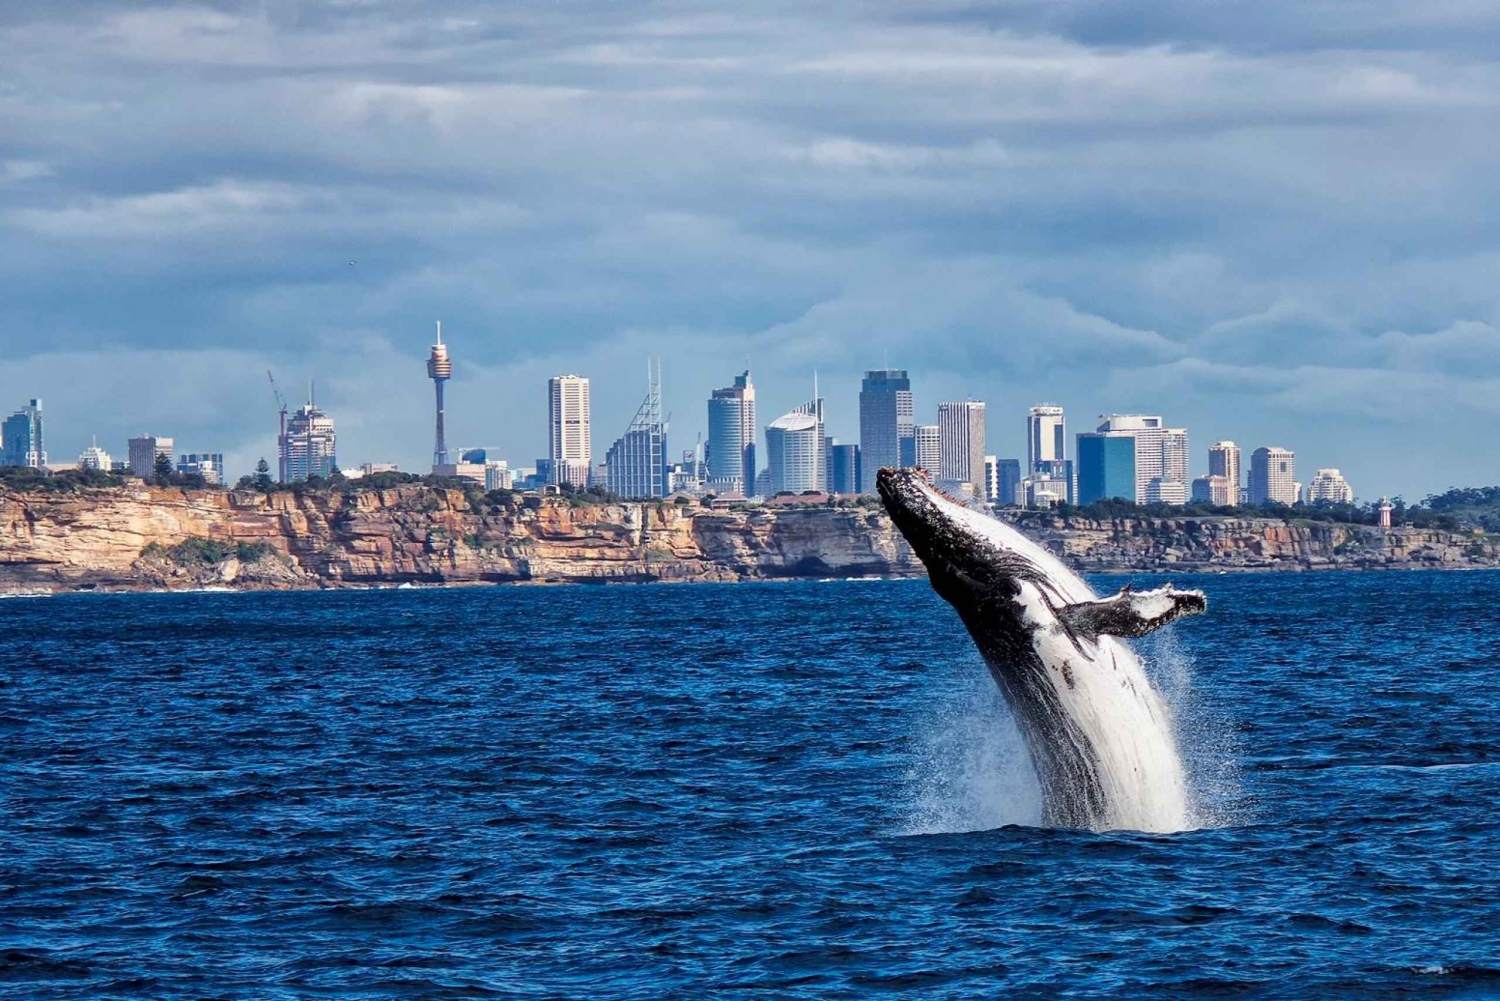 Cruise om walvissen te spotten in Sydney met ontbijt of lunch